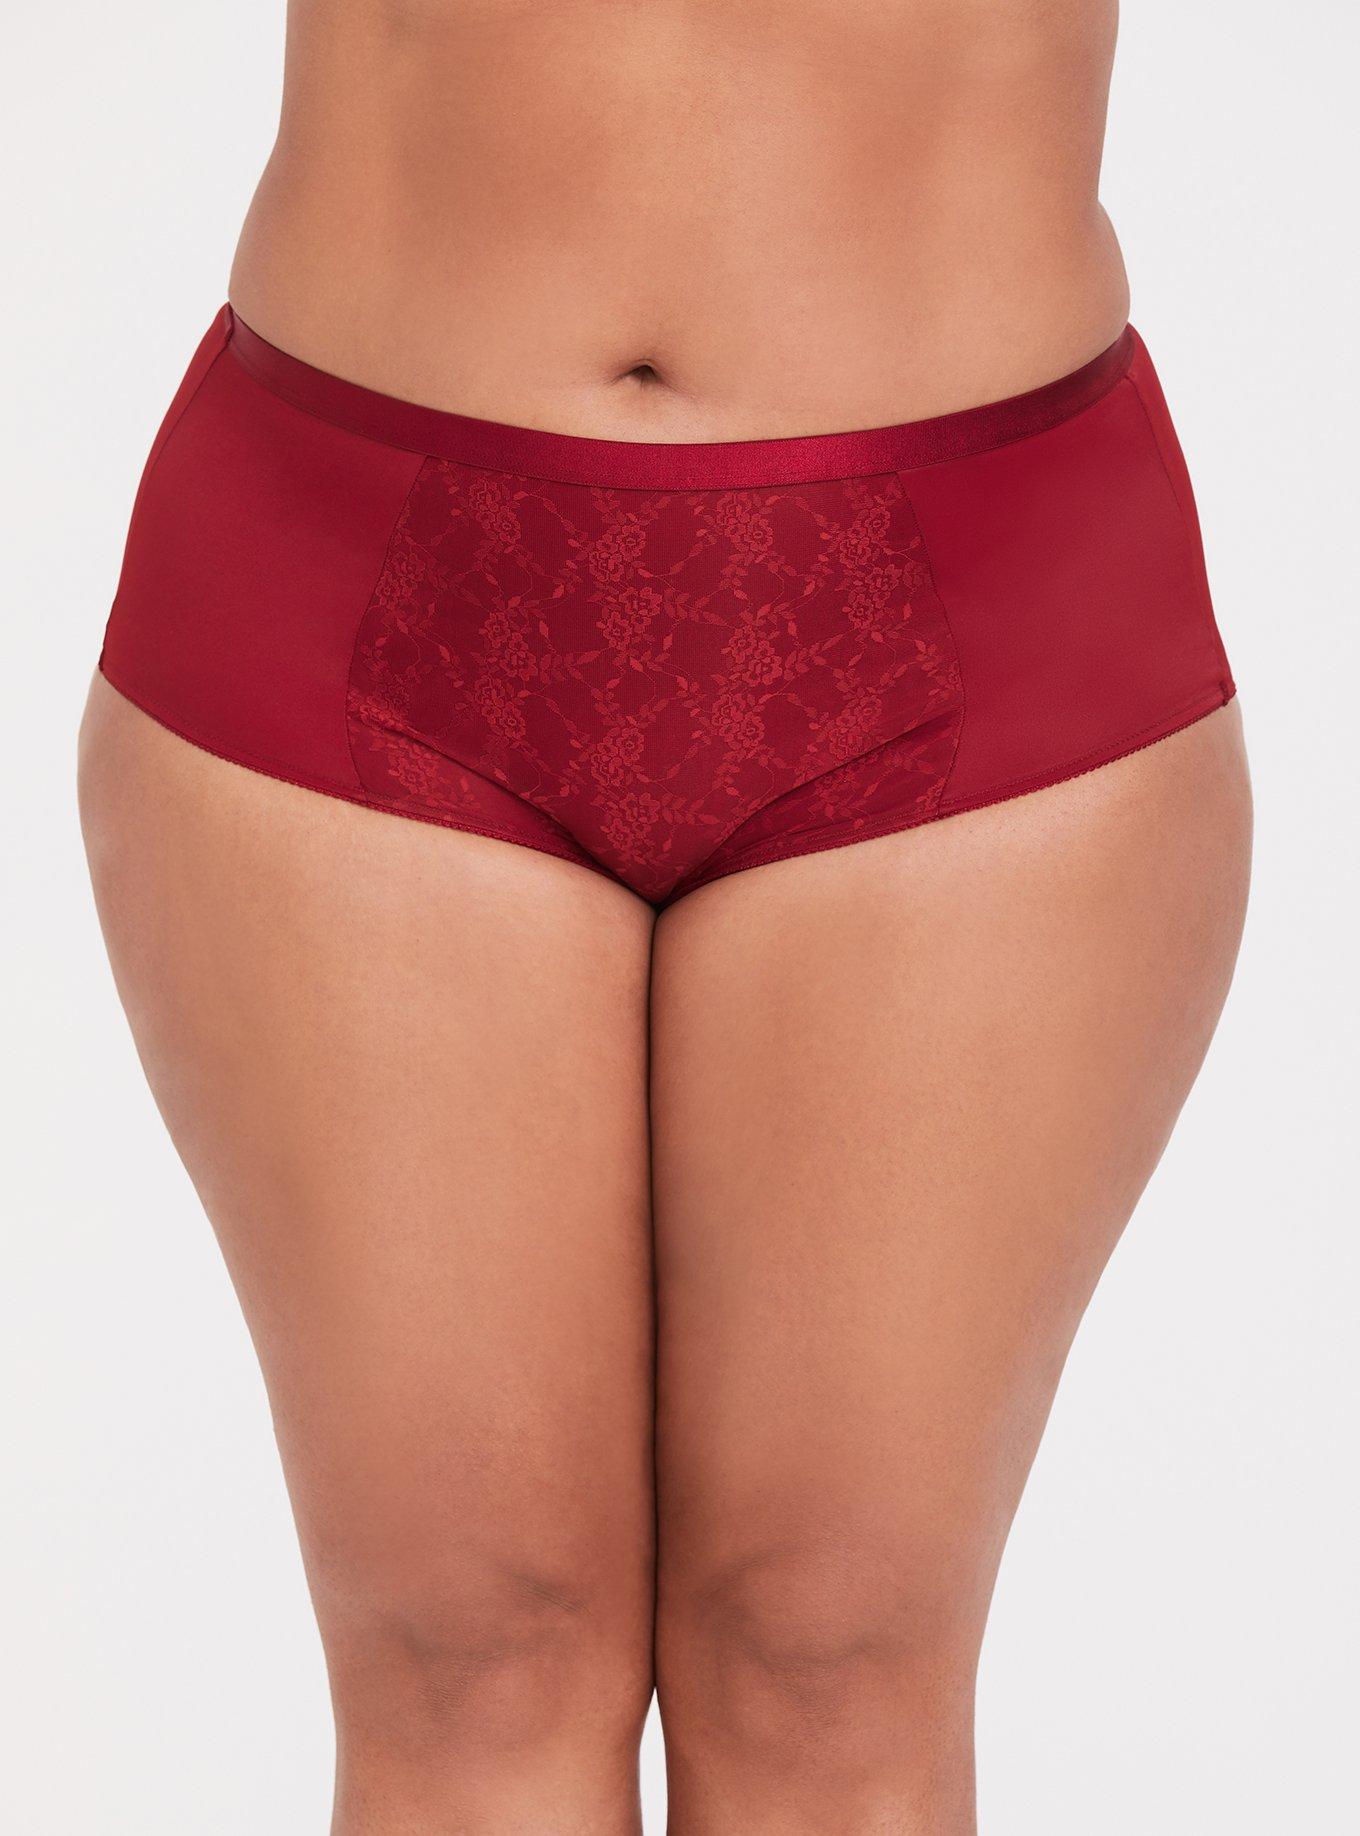 38-42 (c / D) Women's Lace Bra Panties Plus Size Underwear Thin